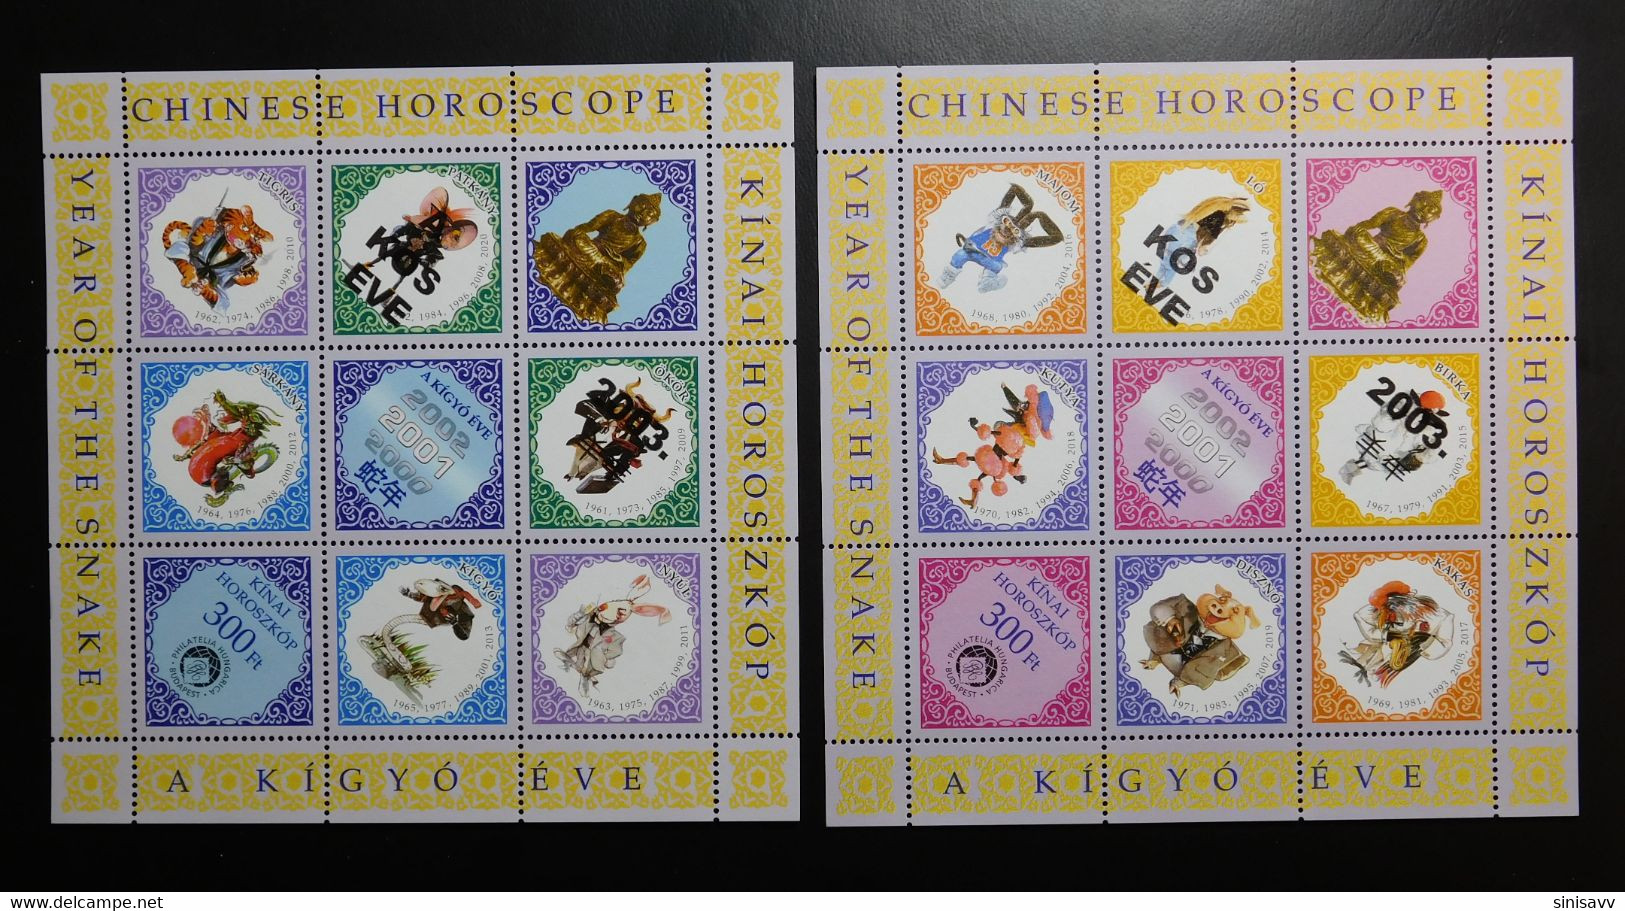 HUNGARY - 2003 - Commemorative Sheet Pair - Chinese Horoscope / Year Of The Ram MNH! - Souvenirbögen